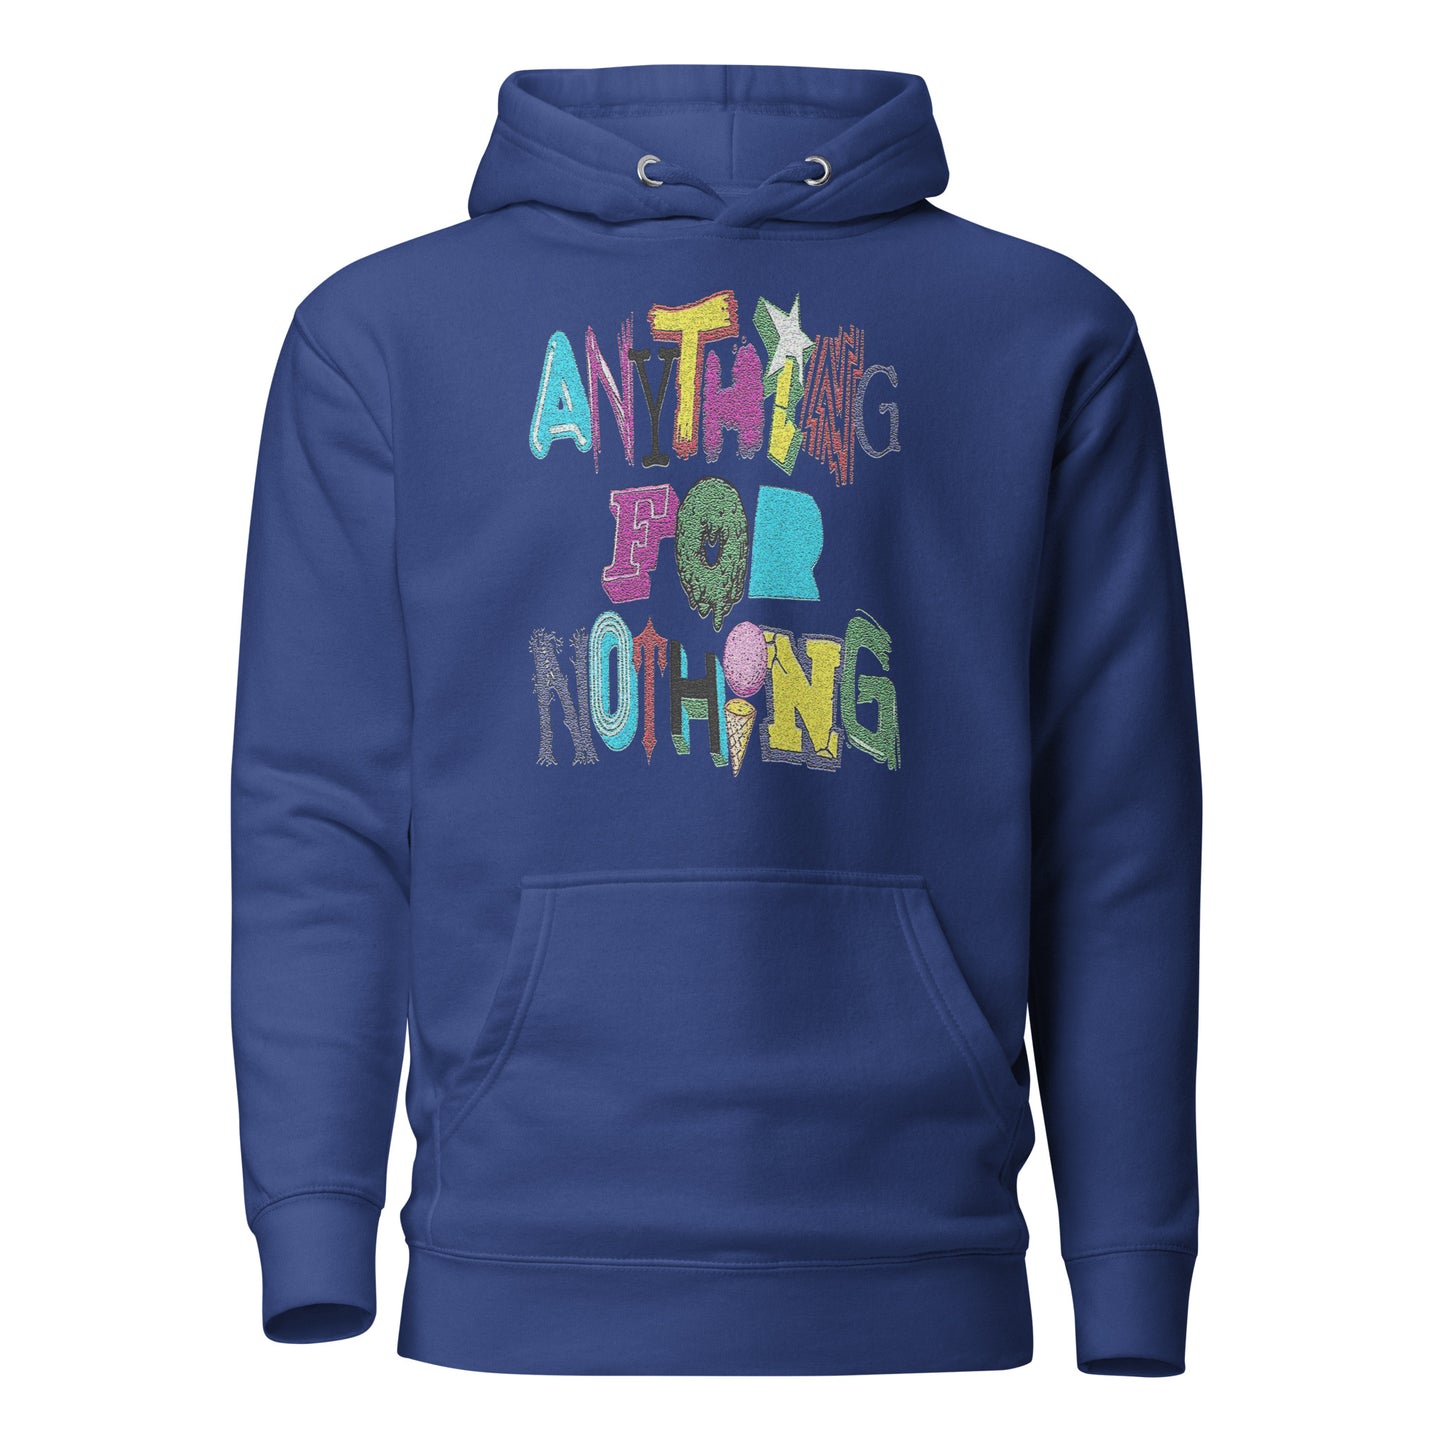 AnythingForNothing Sweatshirt